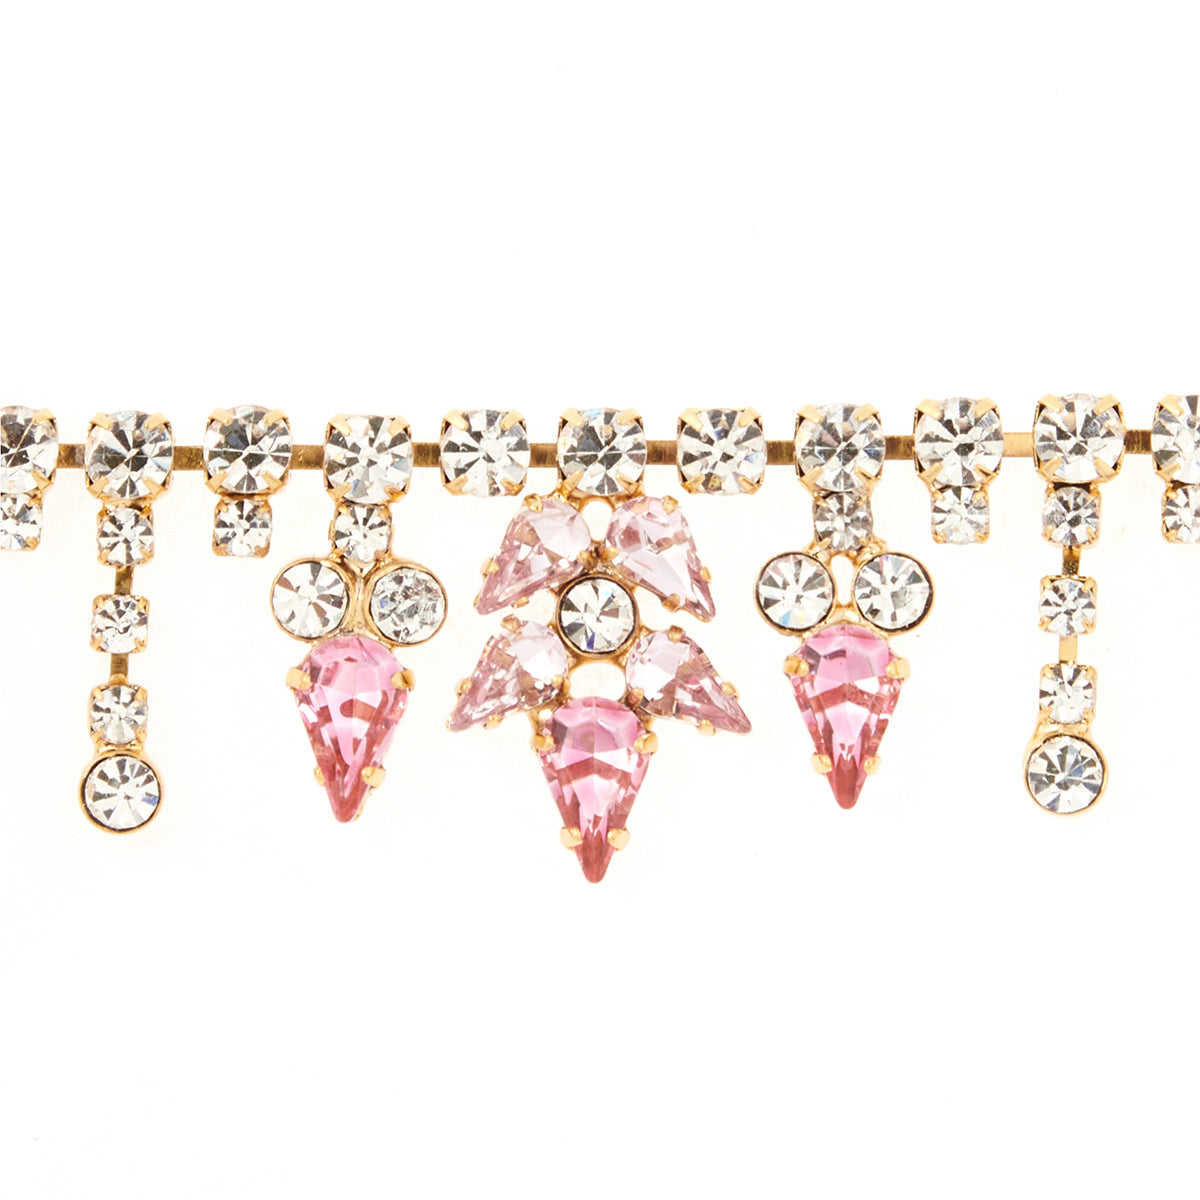 MALIBU Crystal Jewelry Set